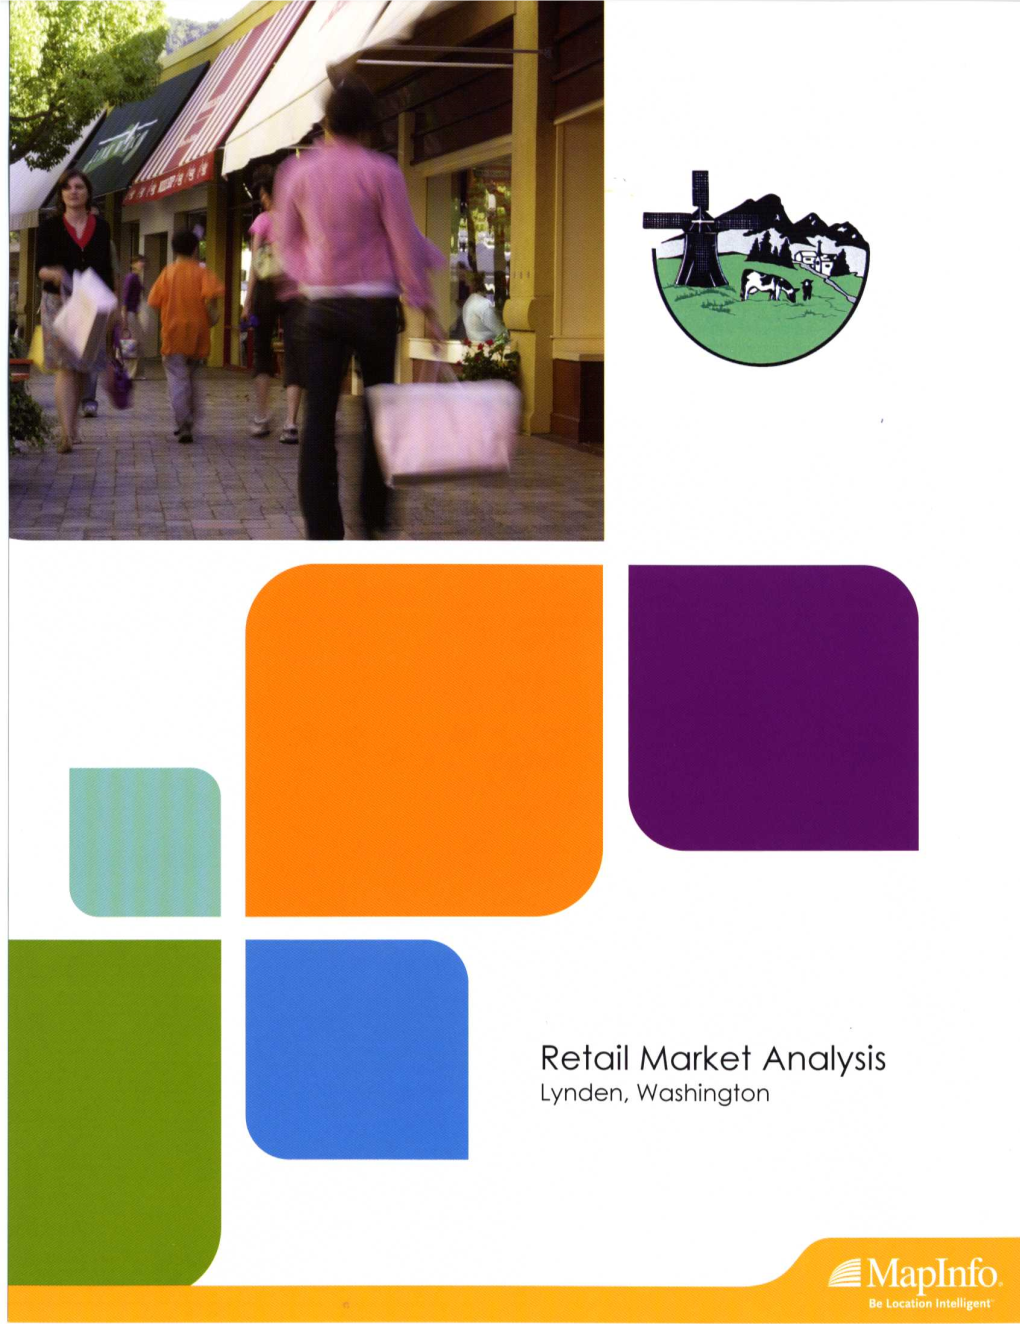 Retail Market Analysis City of Lynden